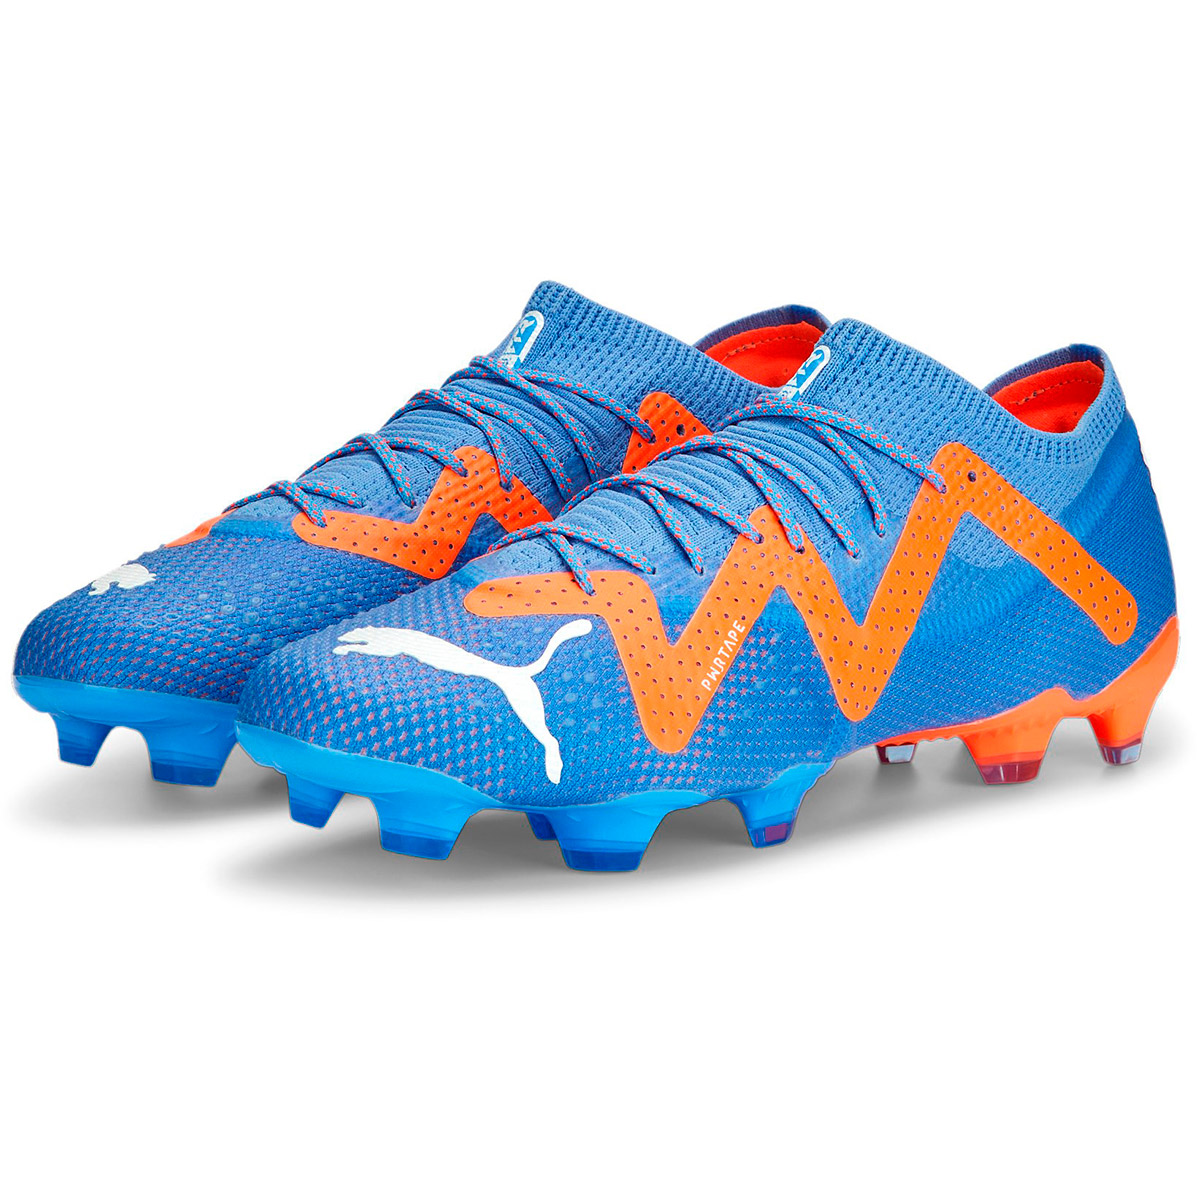 Puma Fußballschuh FG/AG Future Ultimate Low blau-orange-weiß